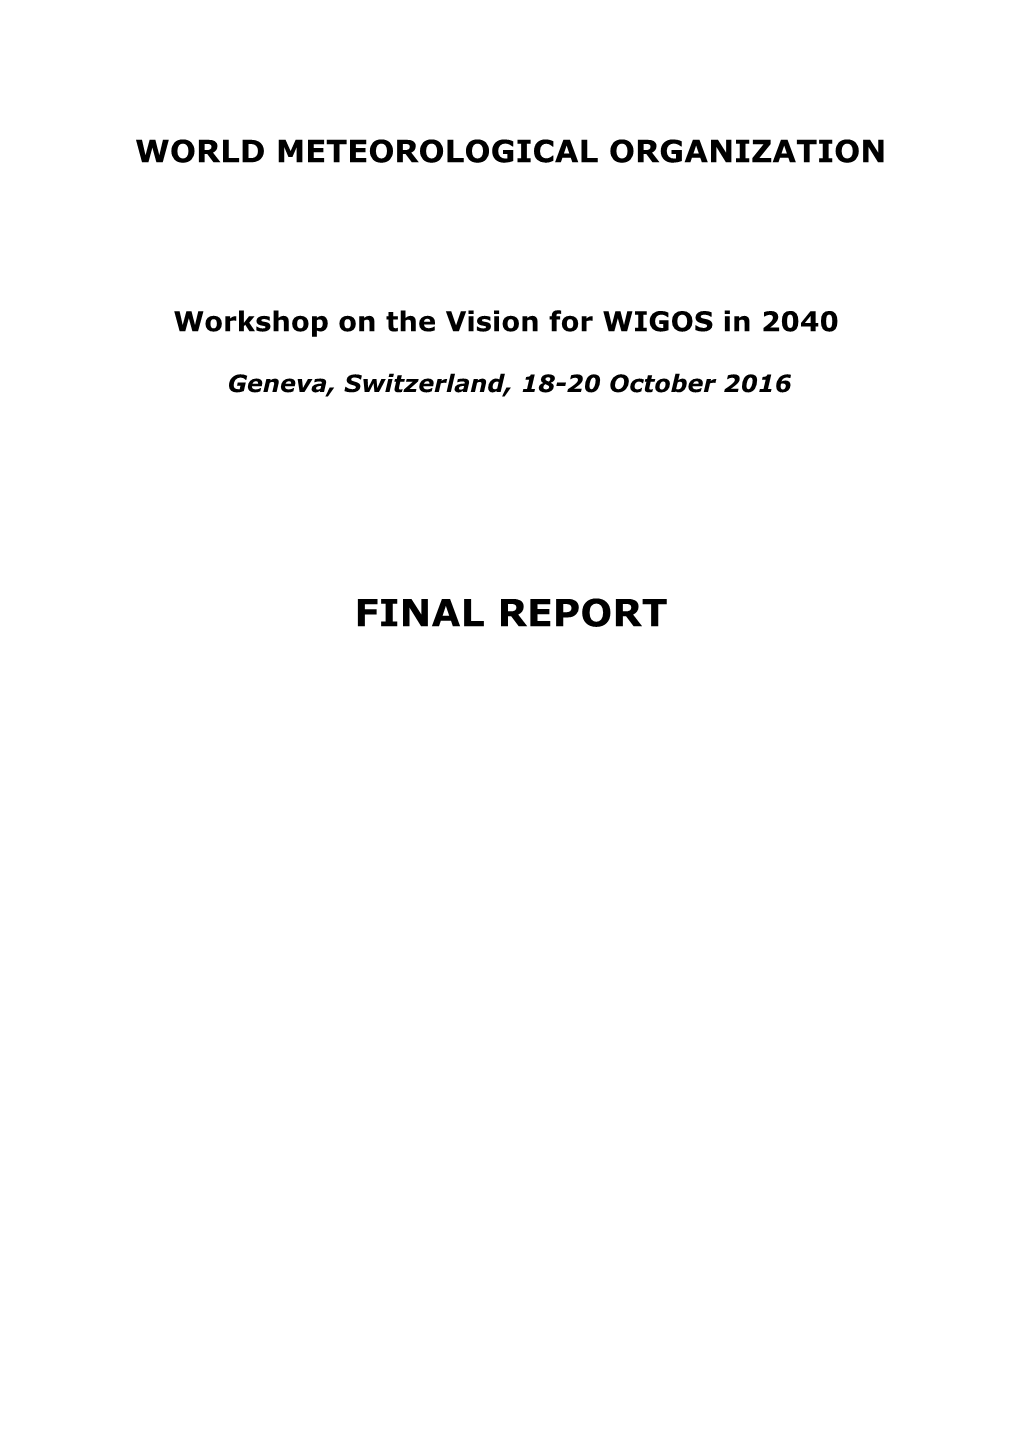 Vision WIGOS 2040 Final Report